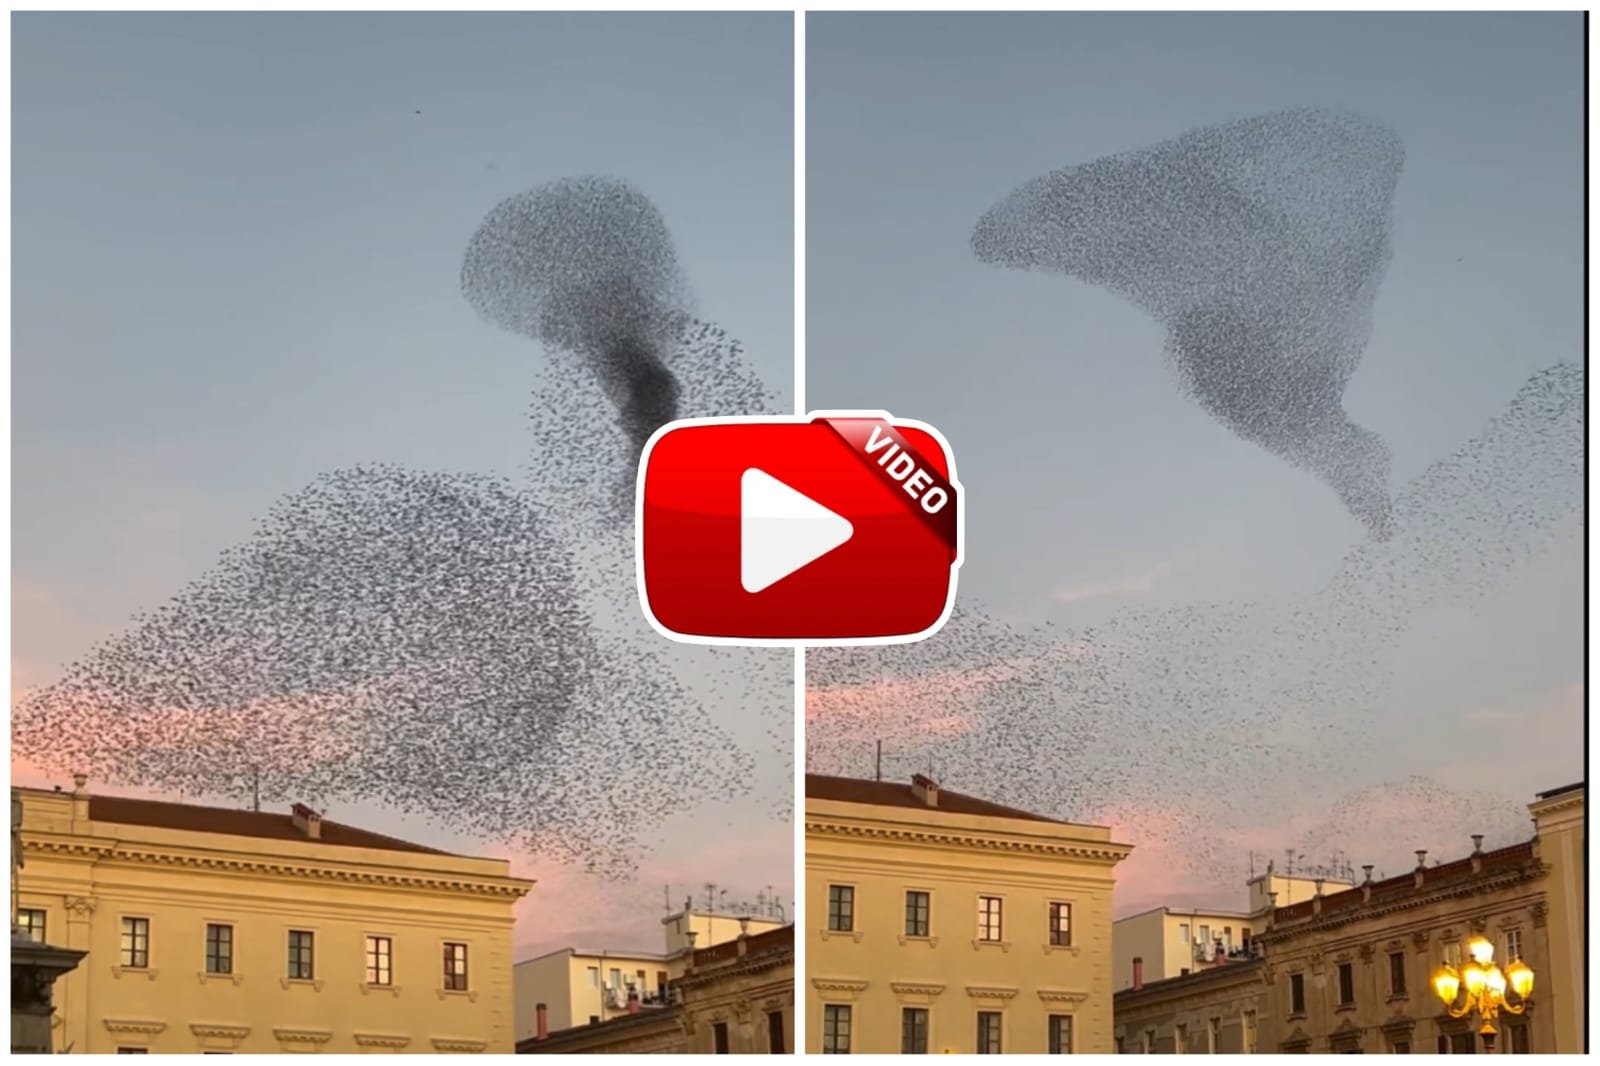 Pakshiyon Ka Video - A flock of birds created an artwork together